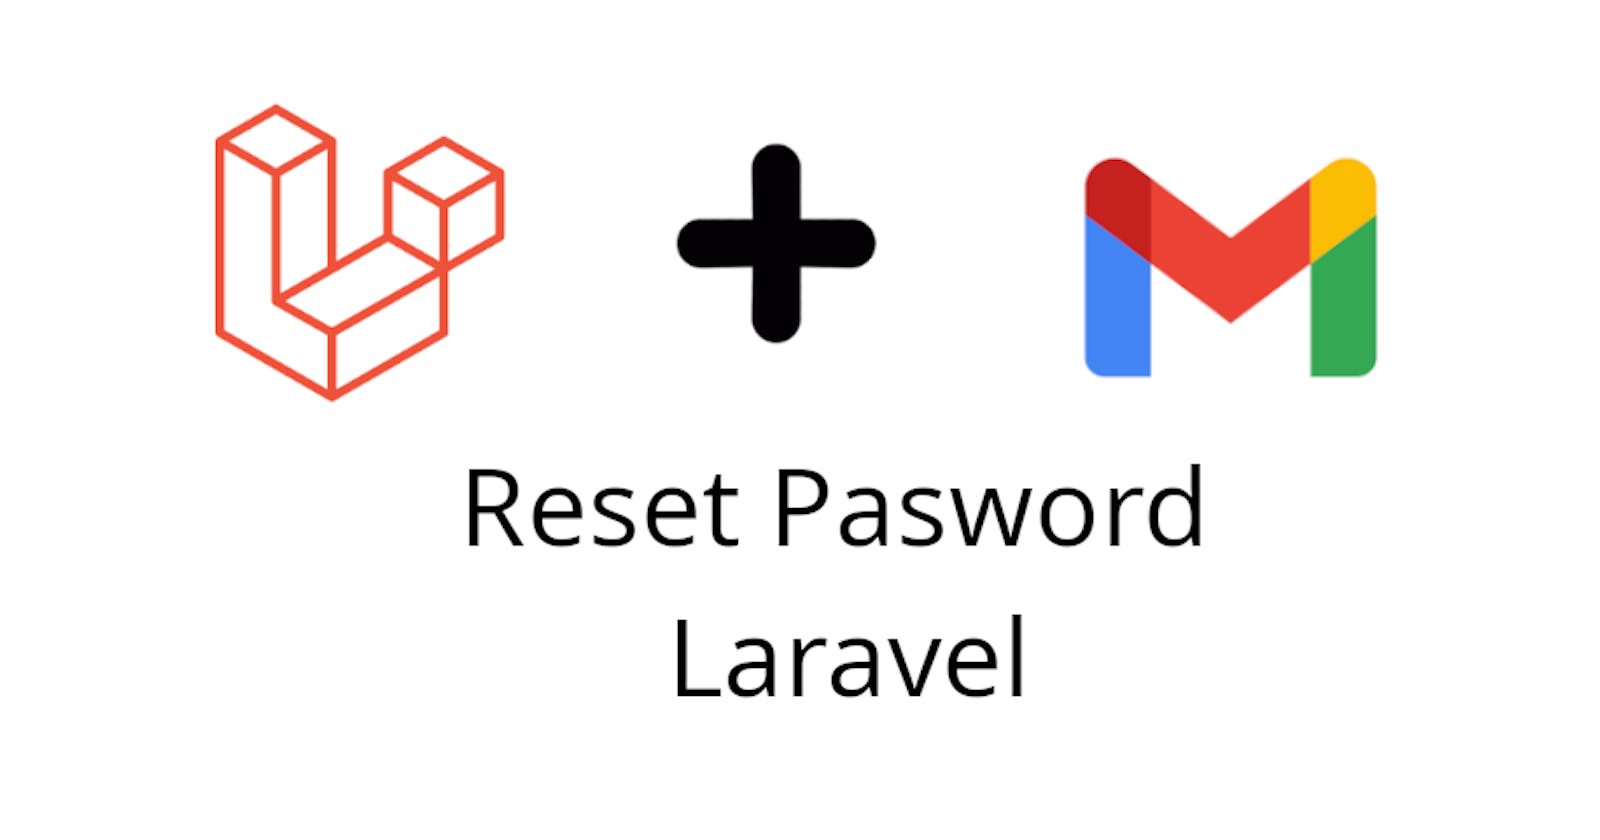 How to Reset Password in Laravel using Gmail